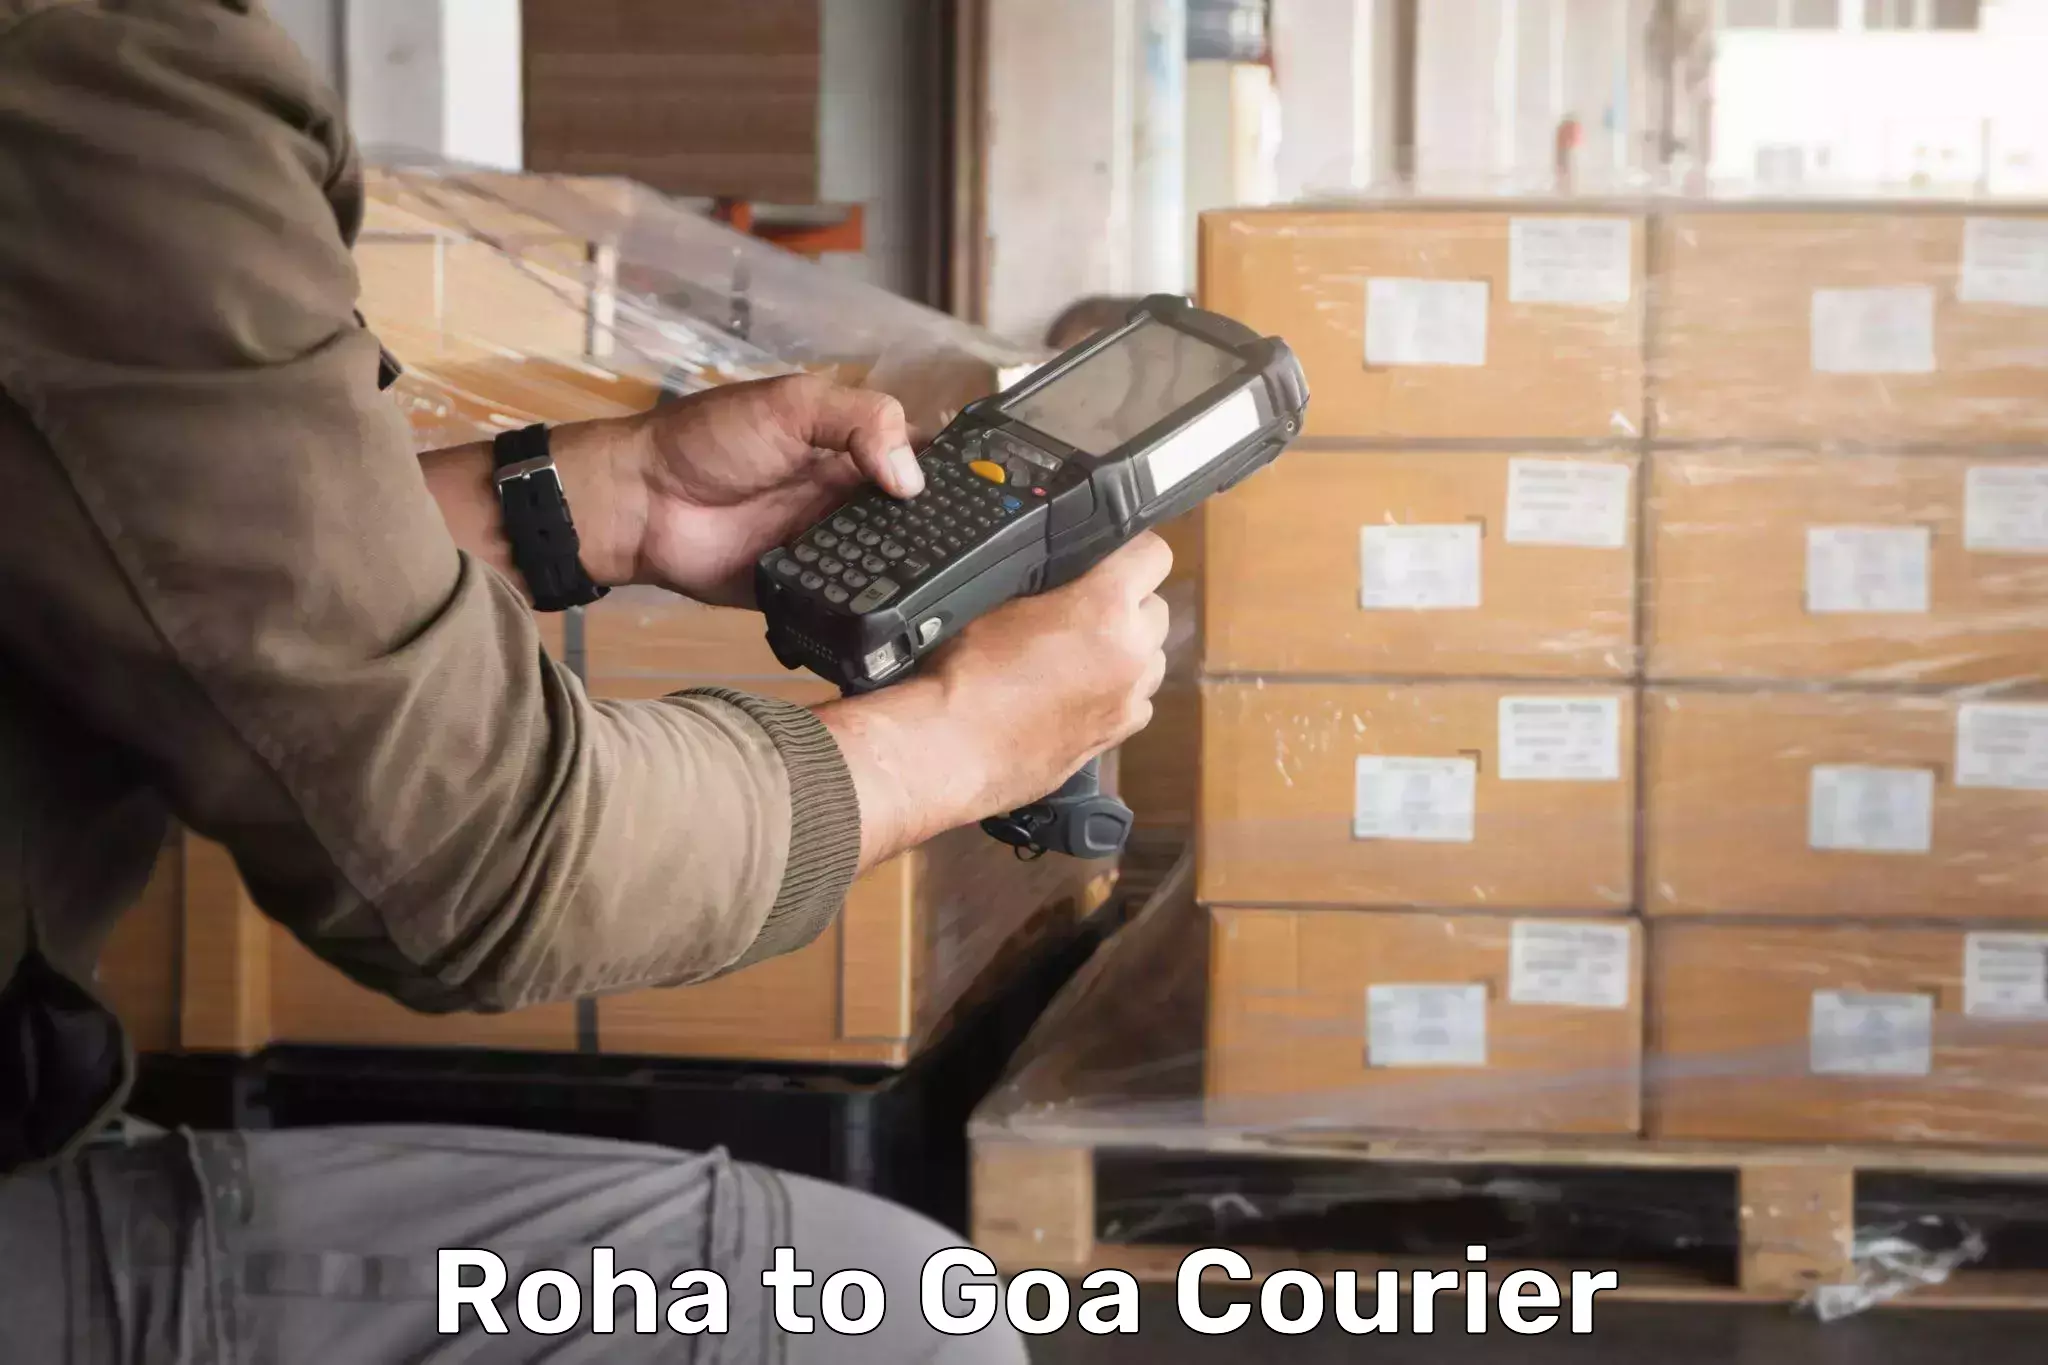 Advanced shipping technology Roha to Goa